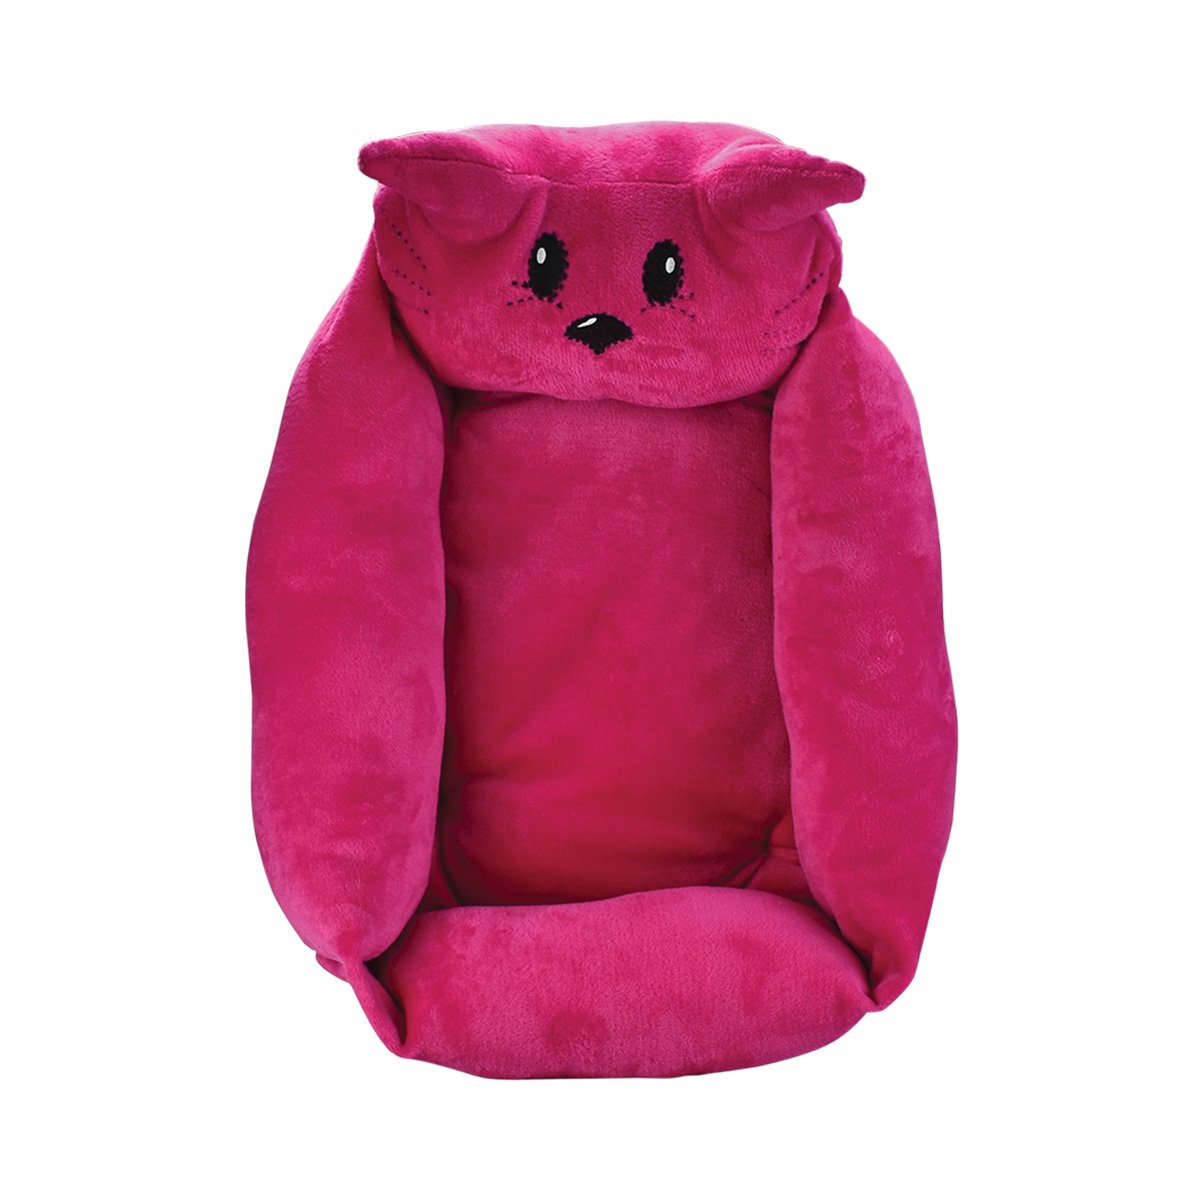 Cama Animalitos - Gato Rosa Fancy Pets Mod. Tx10523